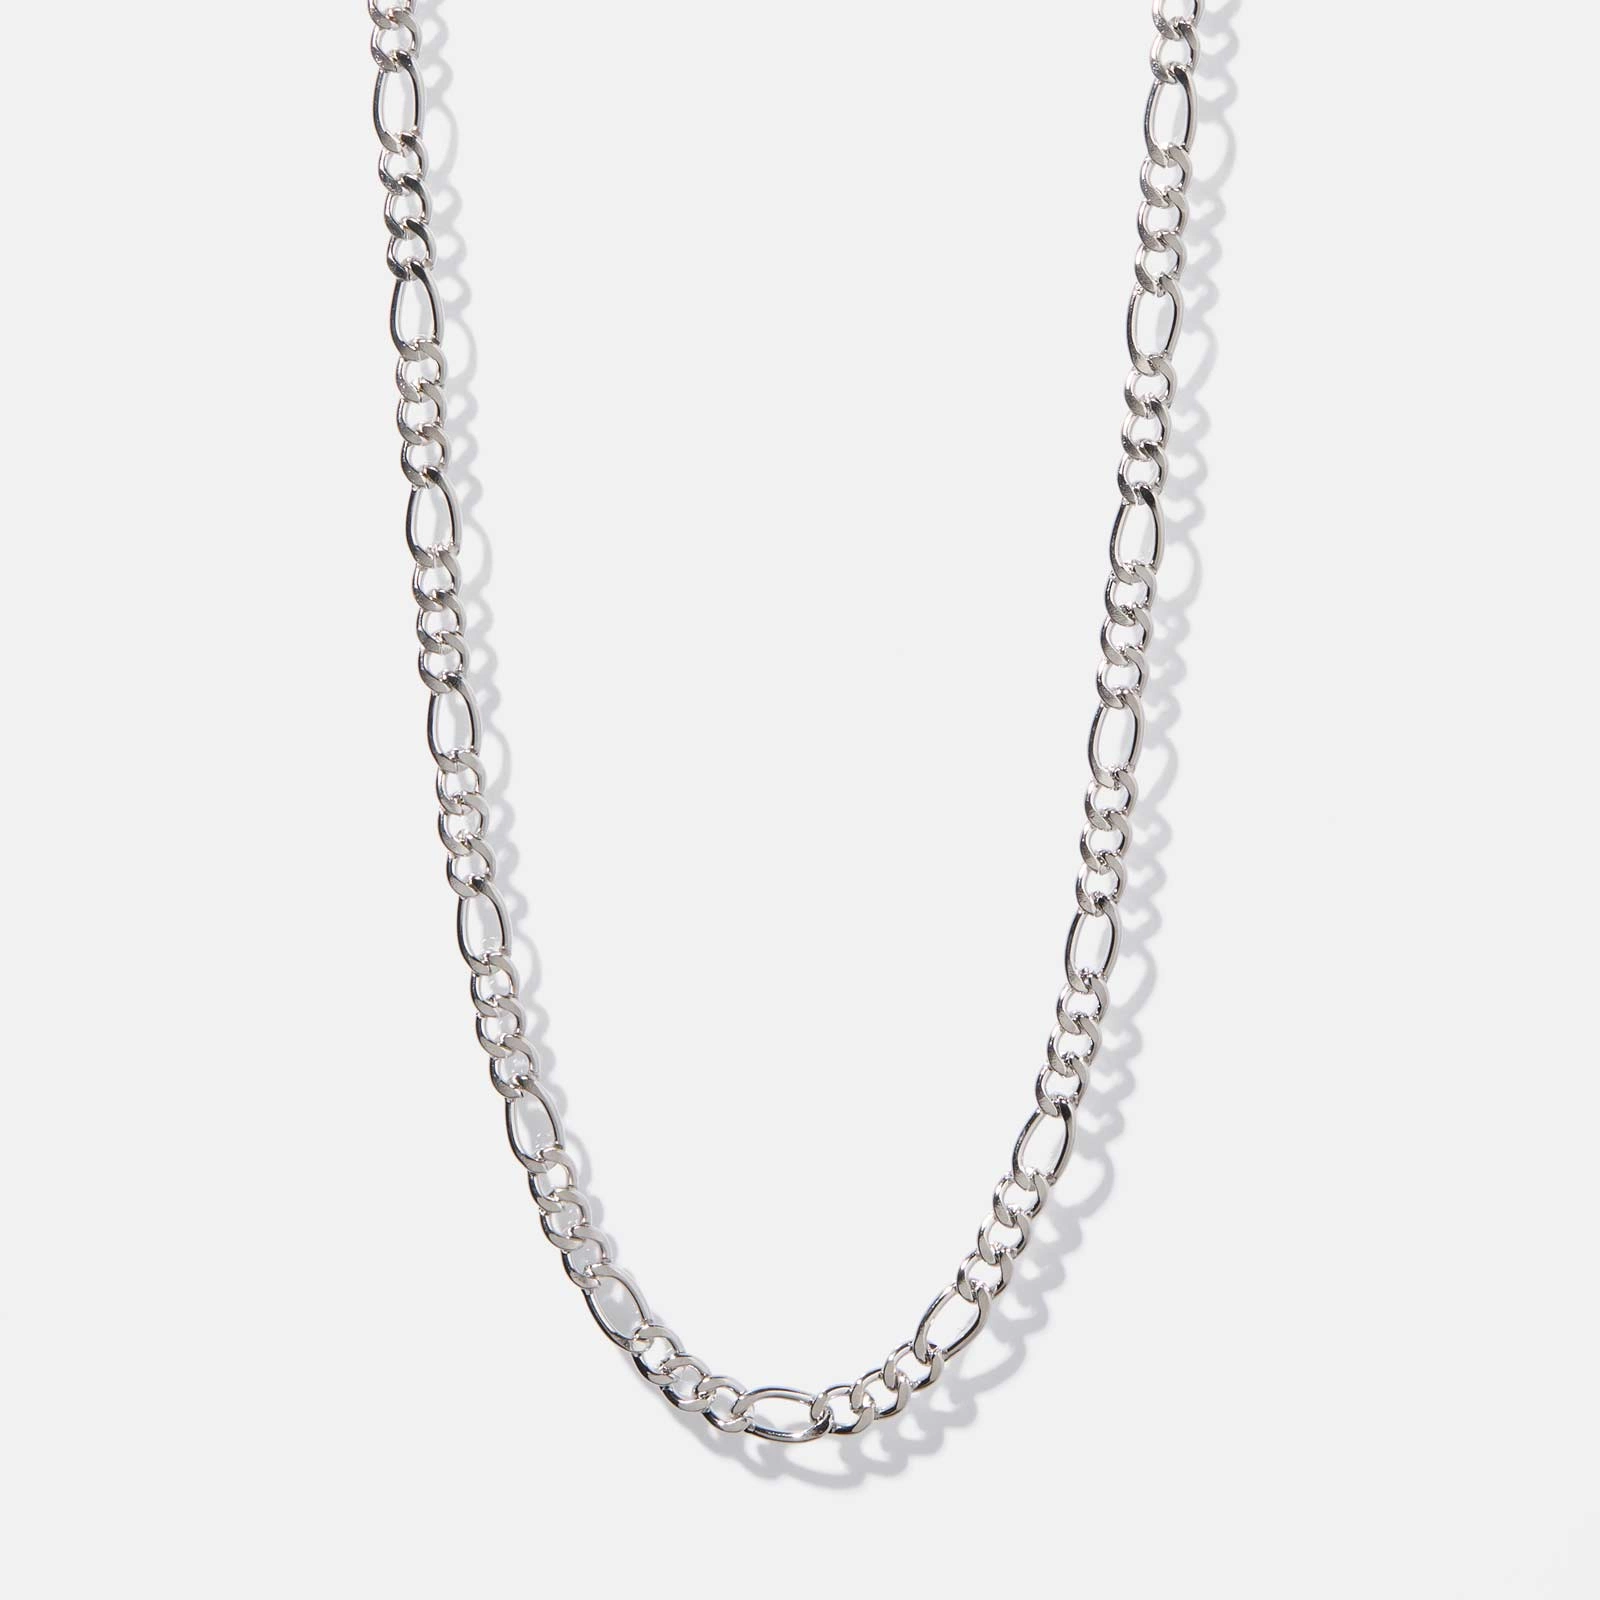 Silverfärgad halsband - figarolänk 70+6 cm